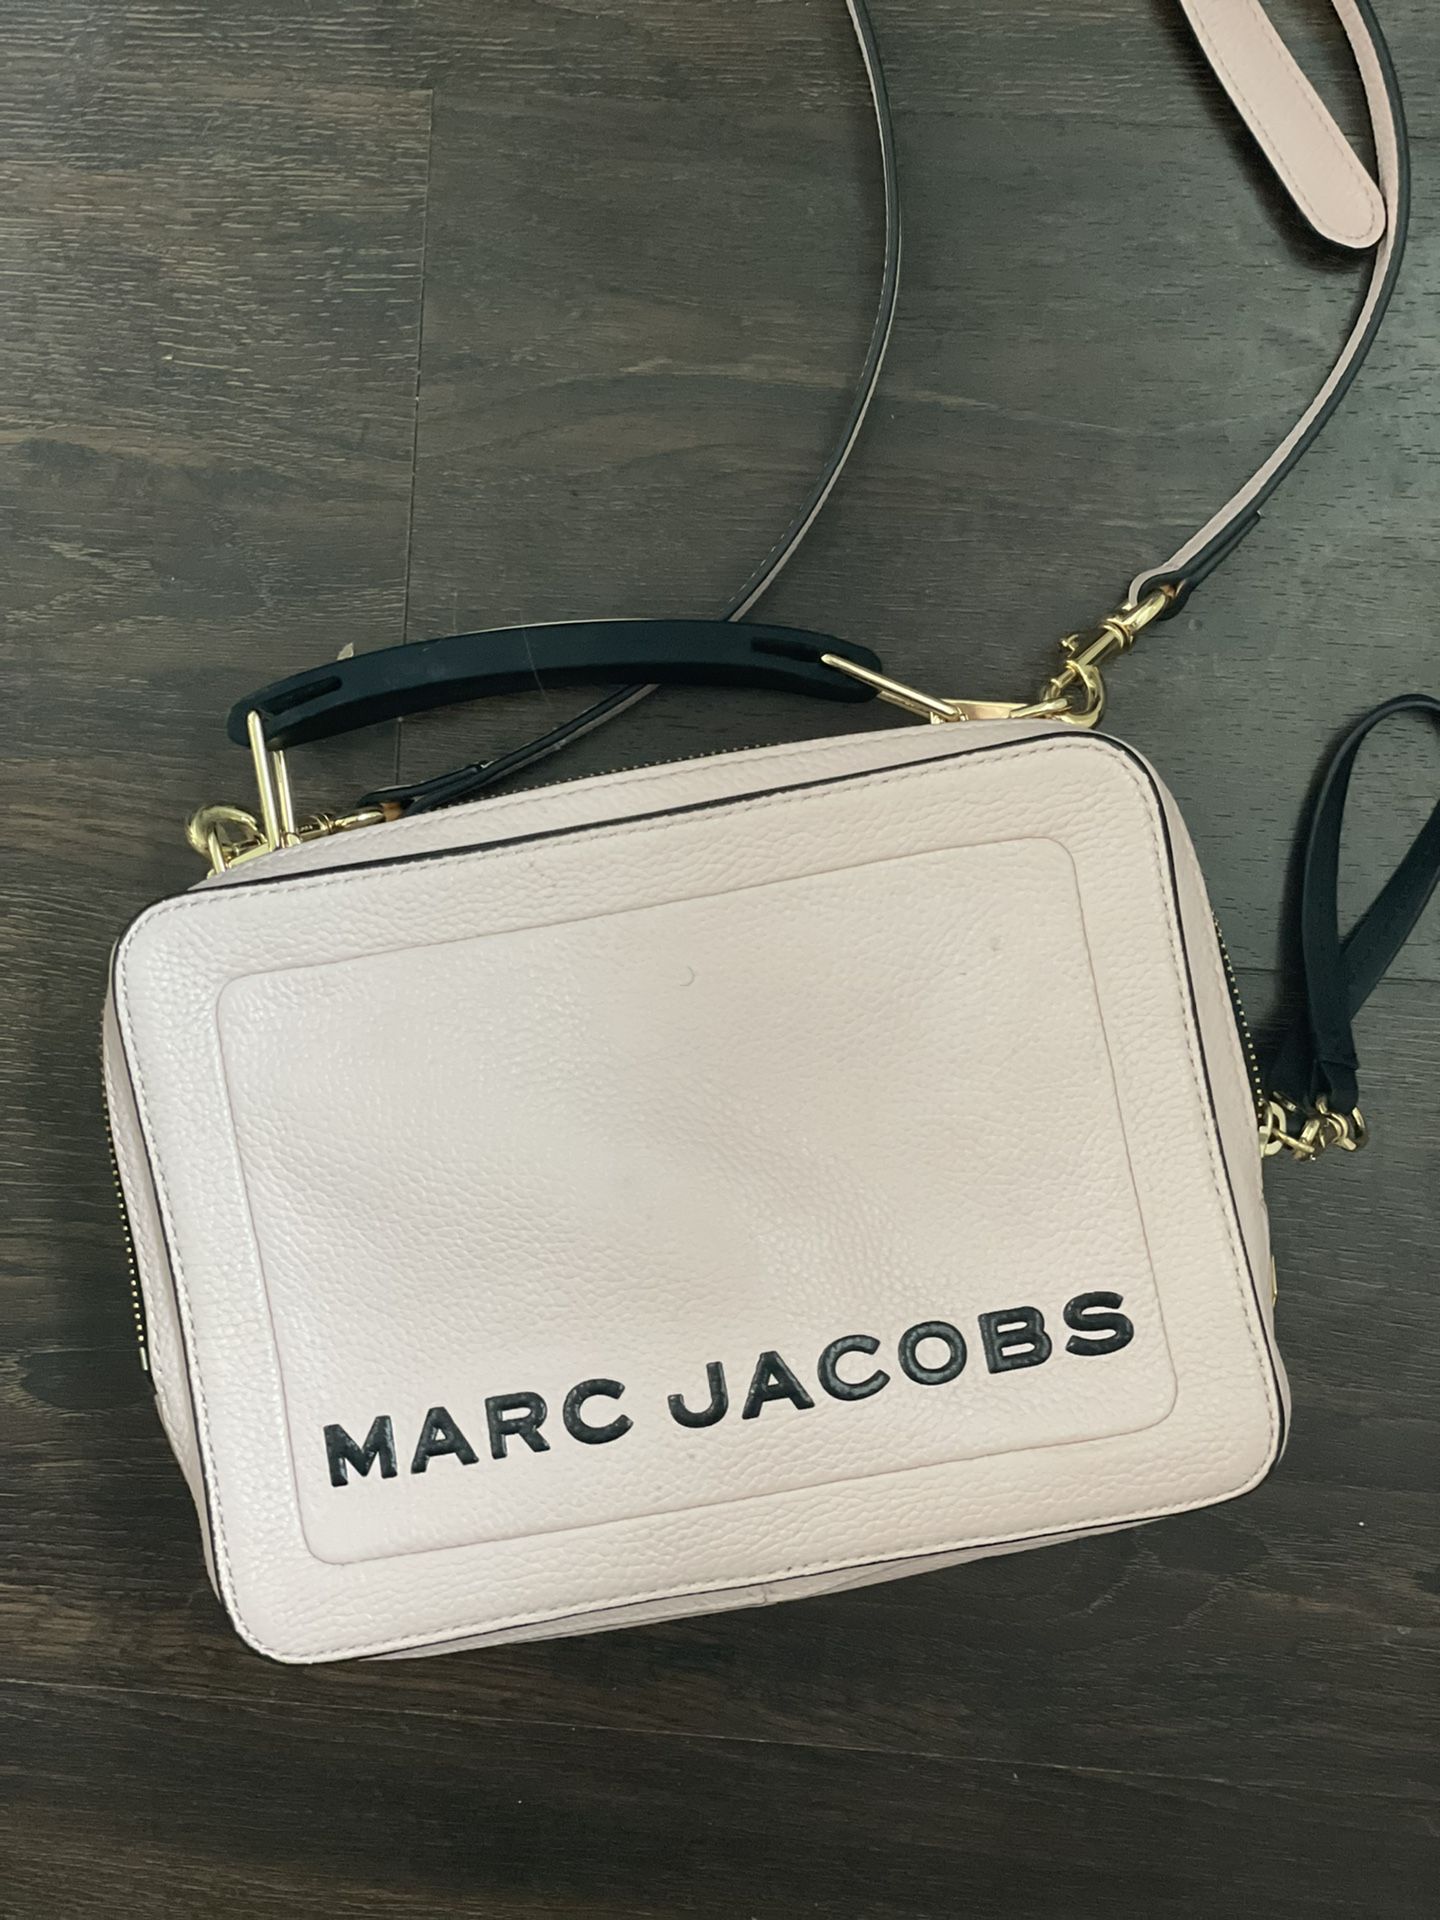 Marc Jacobs Box Bag Pink 200$